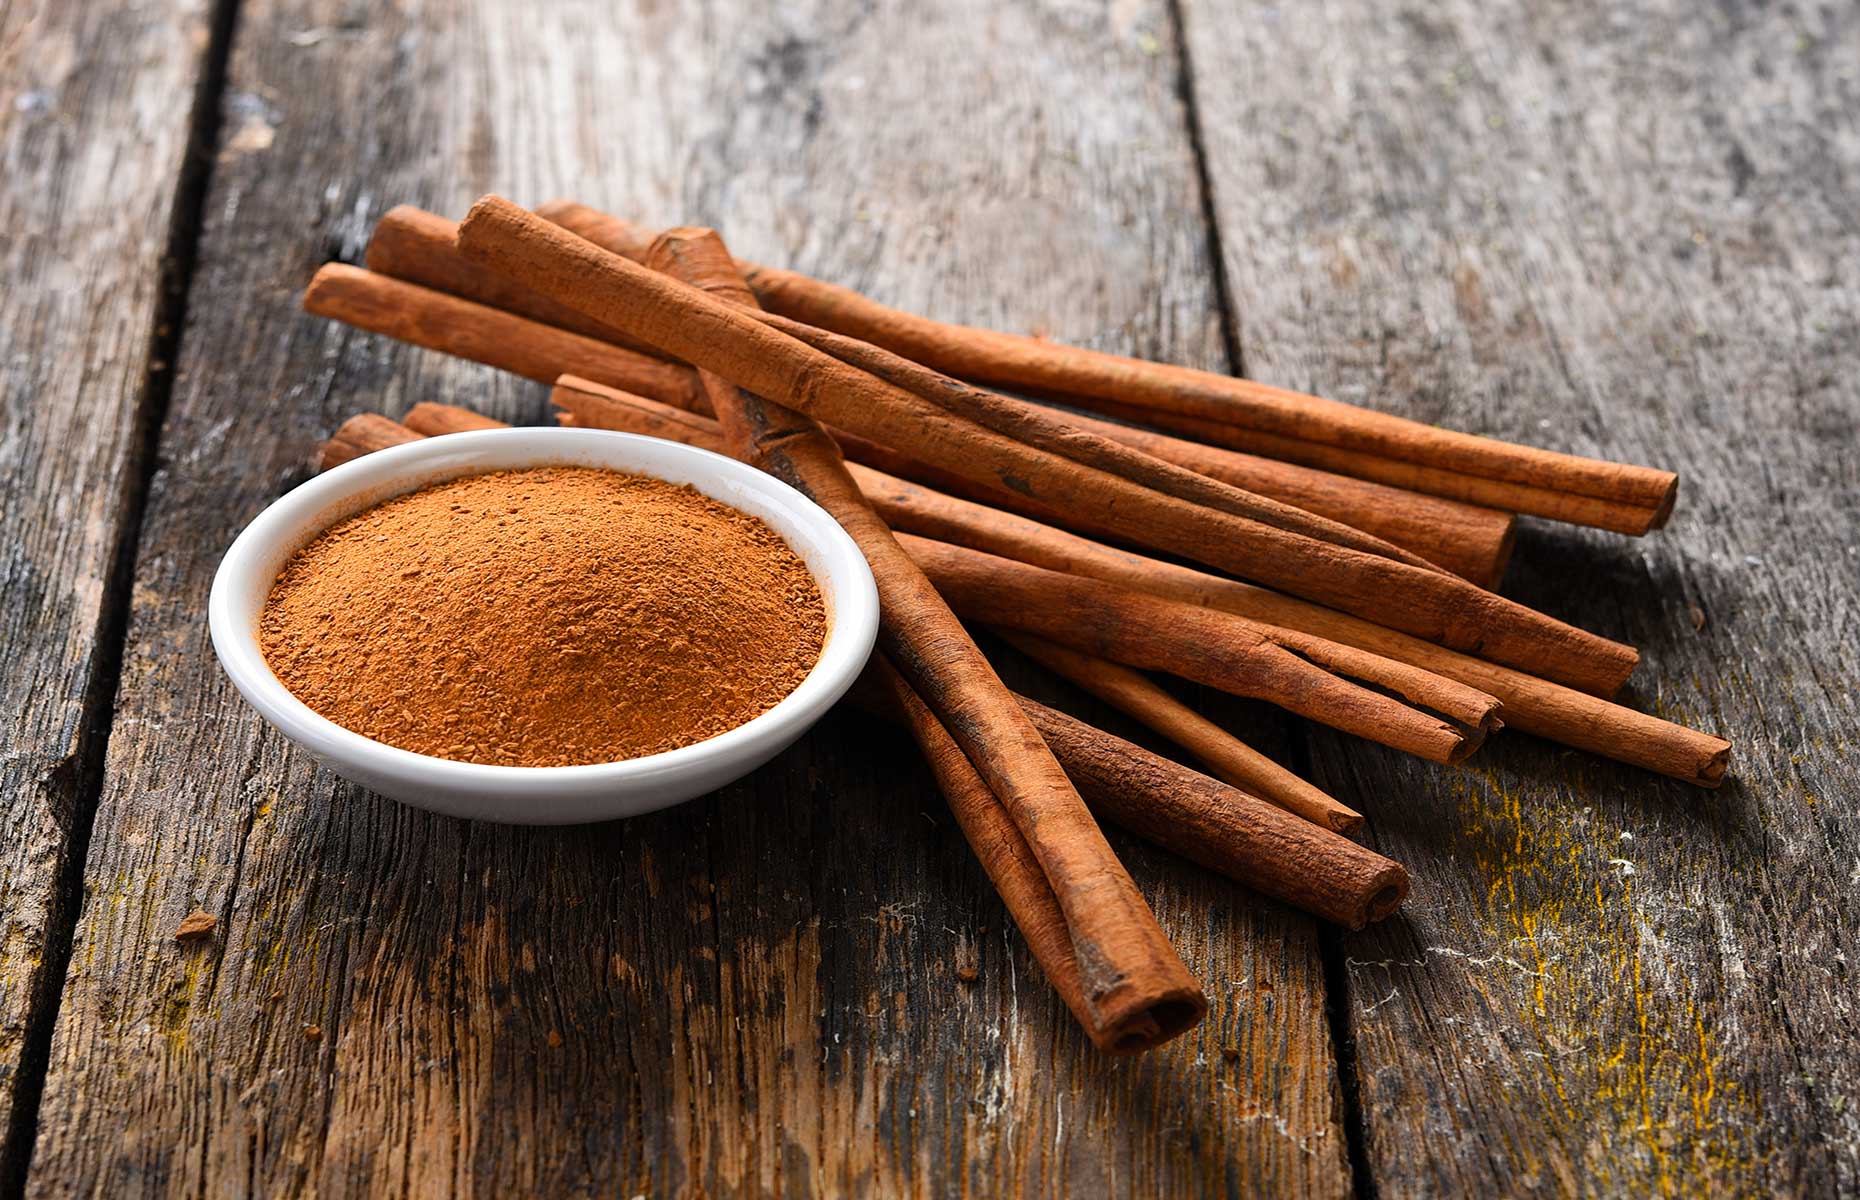 Cinnamon sticks and ground cinnamon (Image: amphaiwan/Shutterstock)